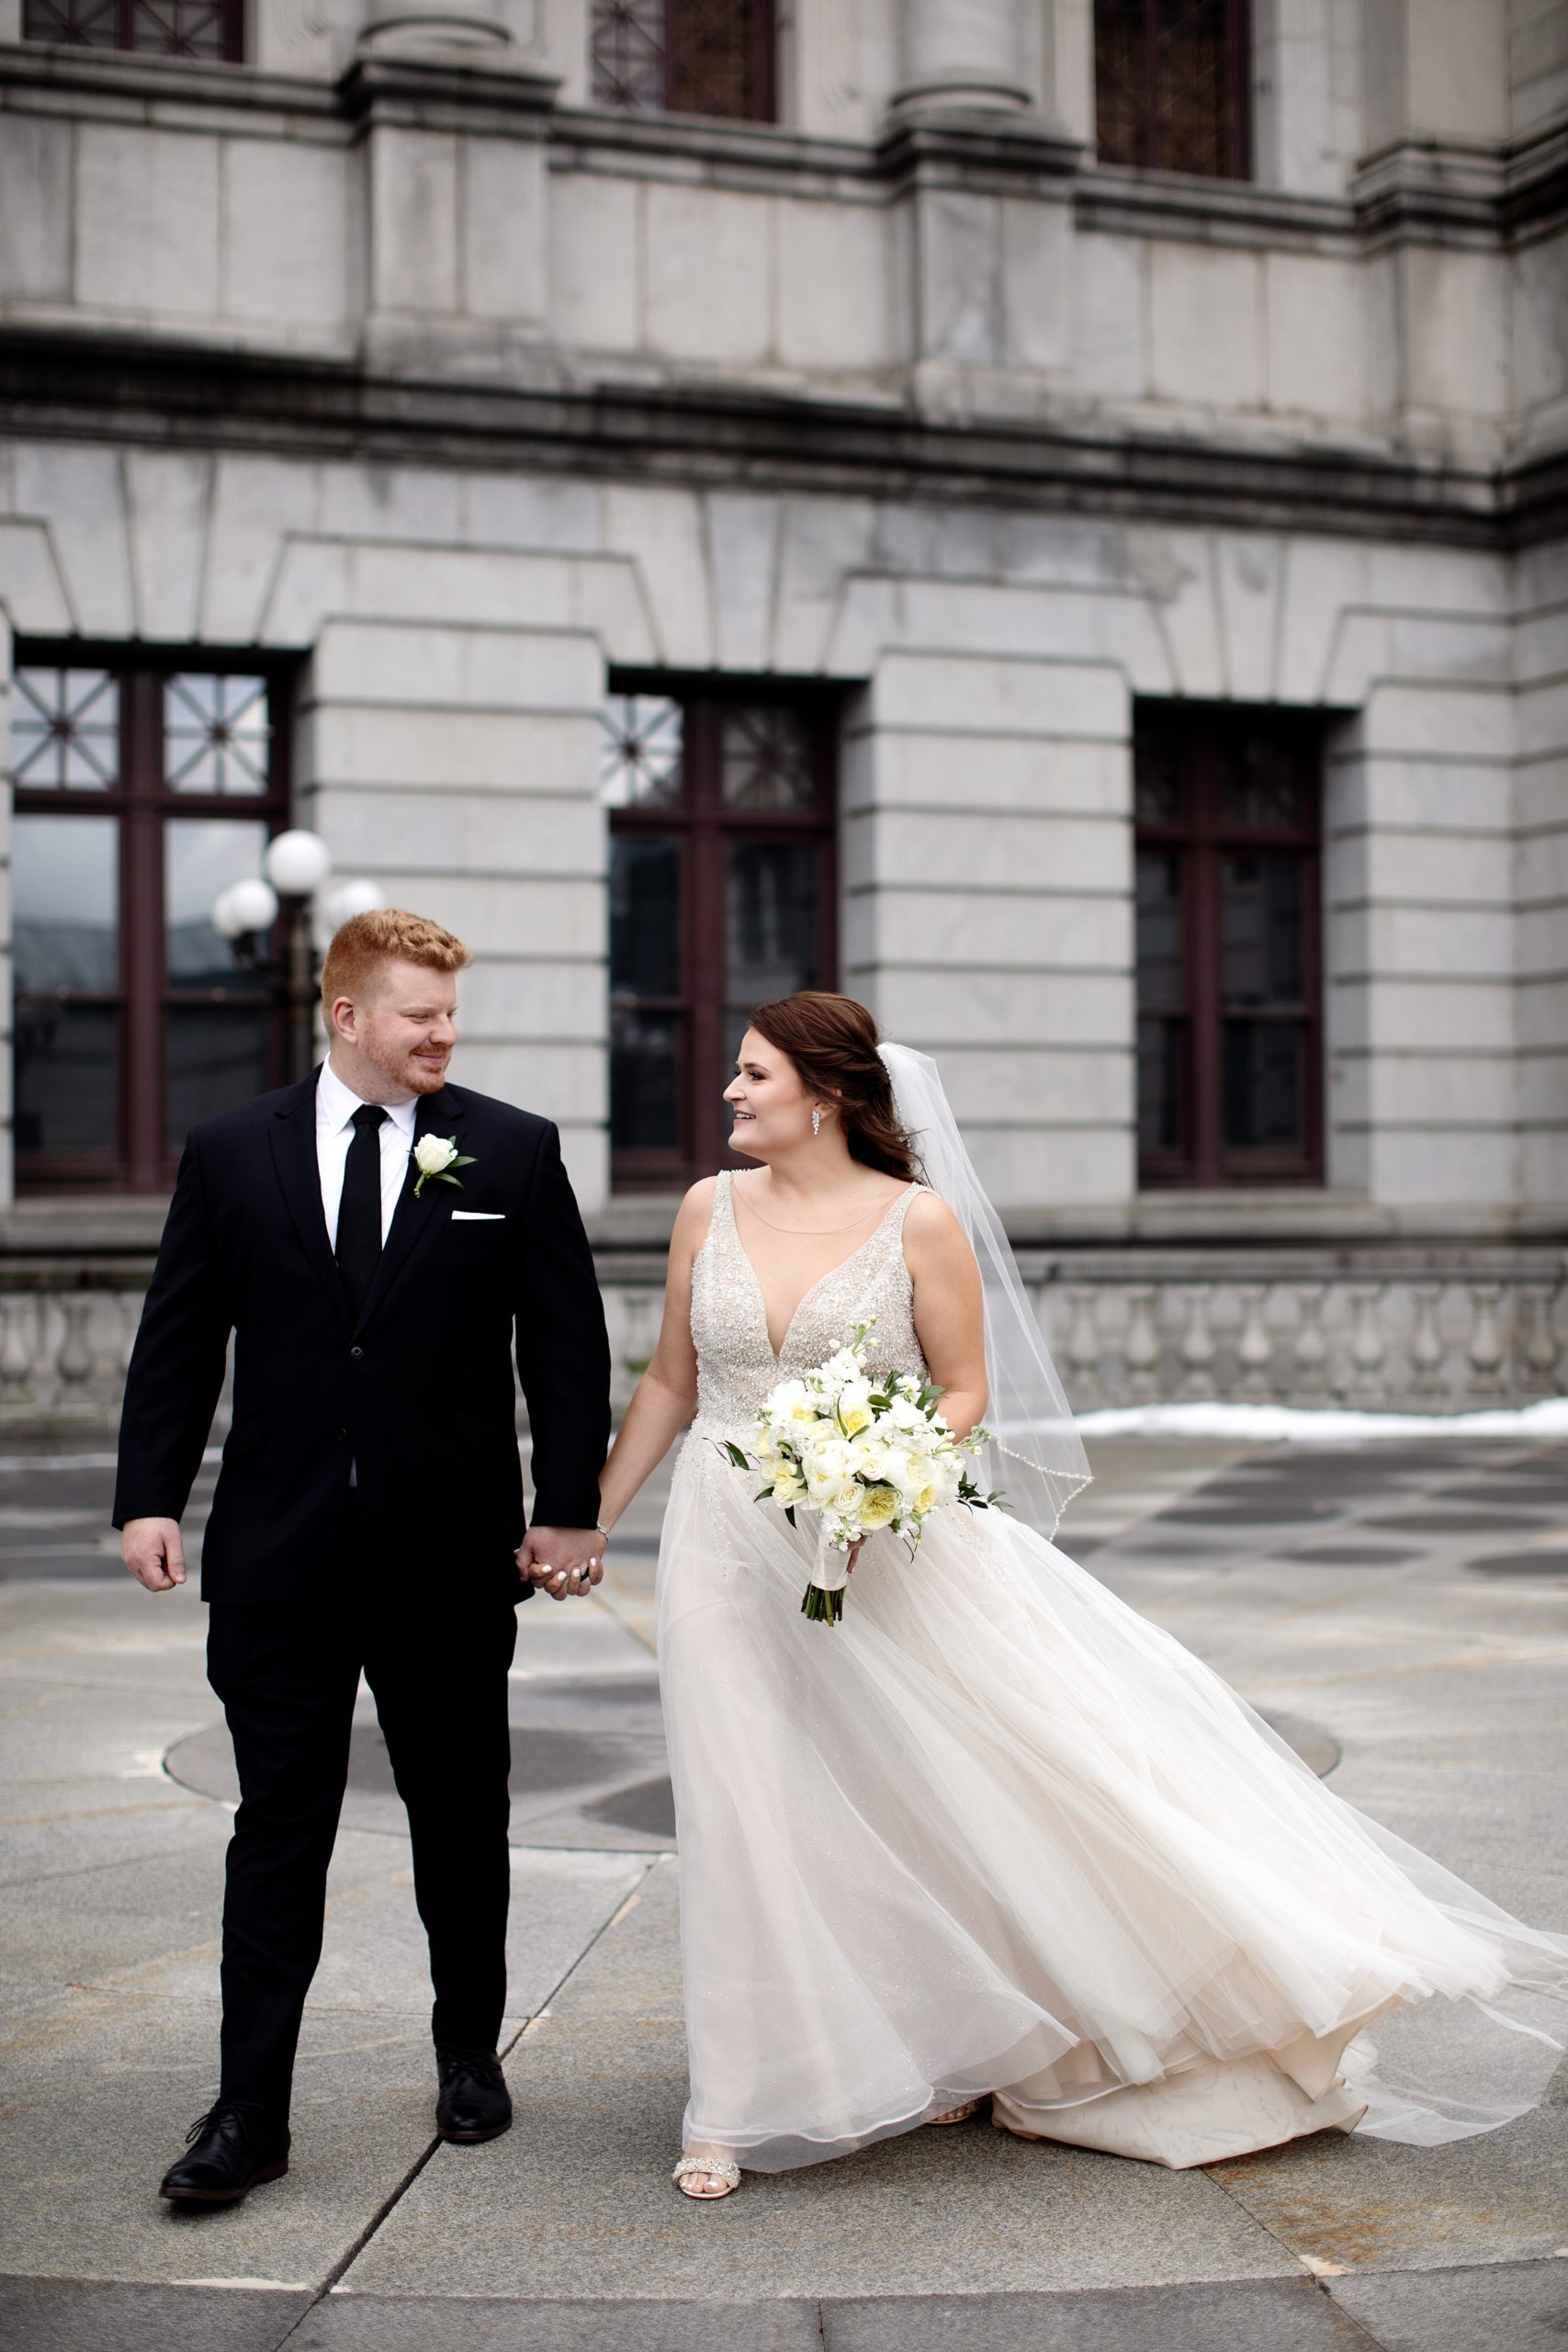 Harrisburg, PA State Capitol Building Intimate Wedding. Harrisburg Wedding Photographer